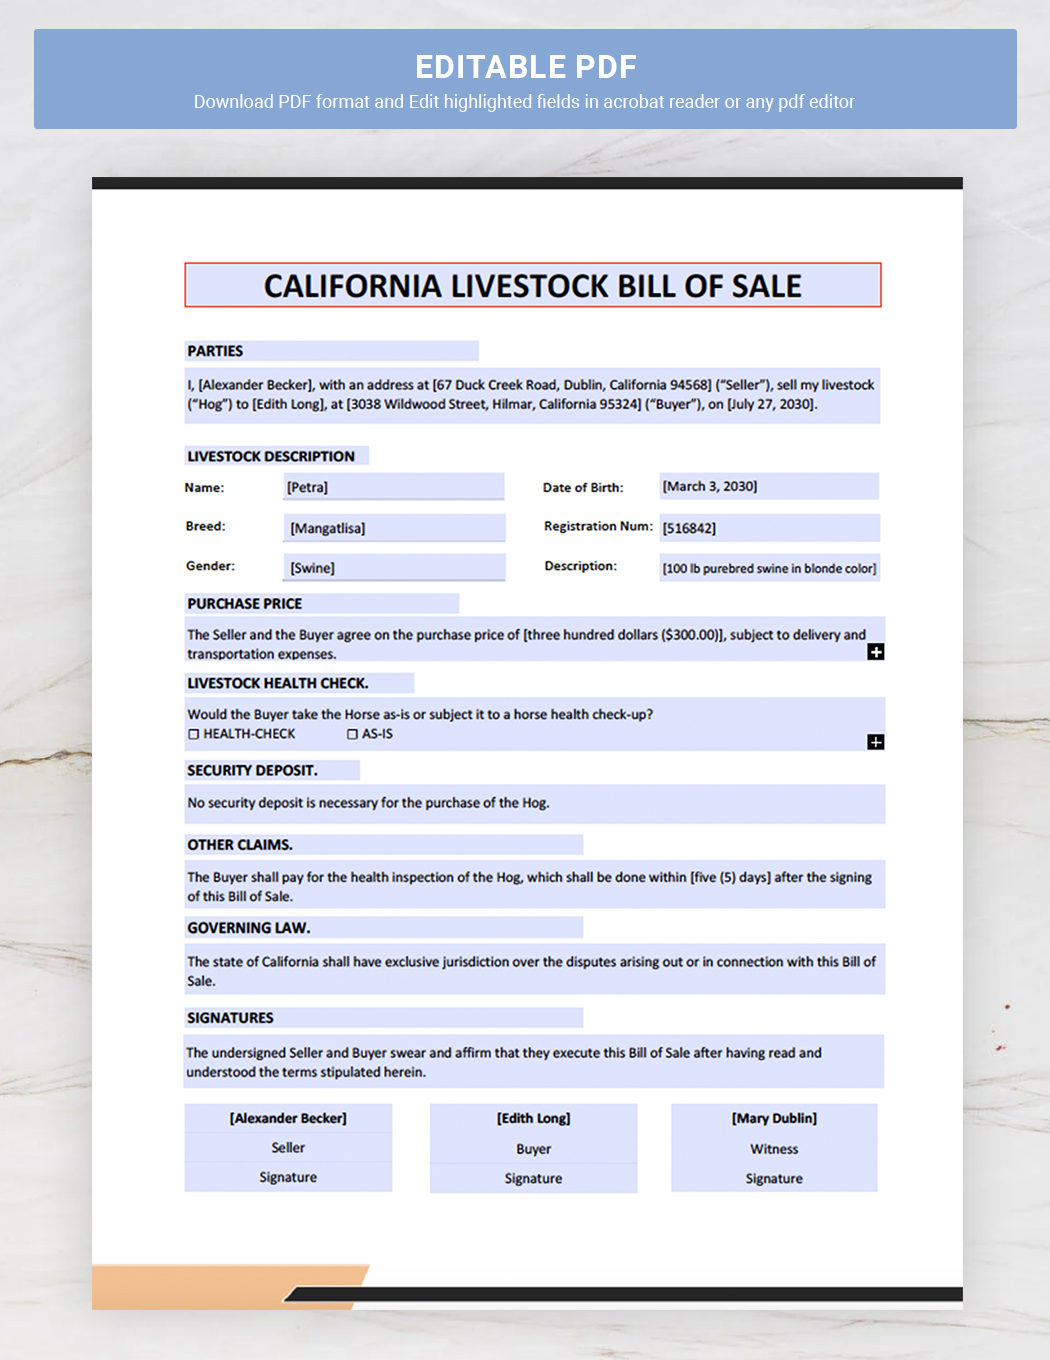 California Livestock Bill of Sale Template